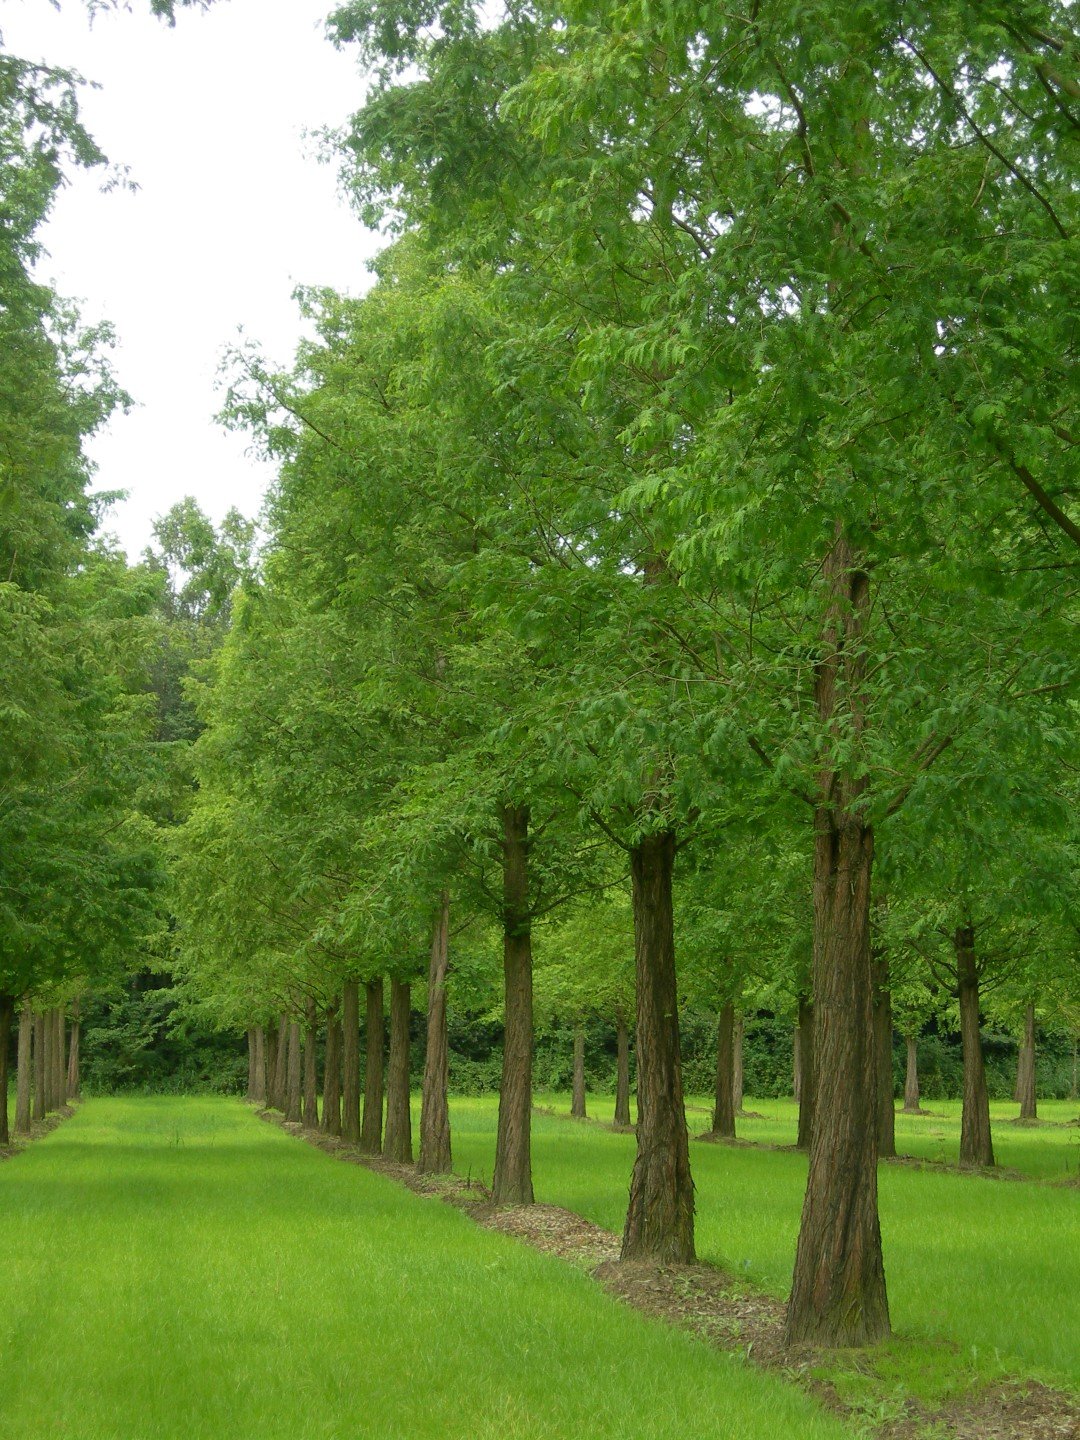 Mestasequoia glyptostroboides